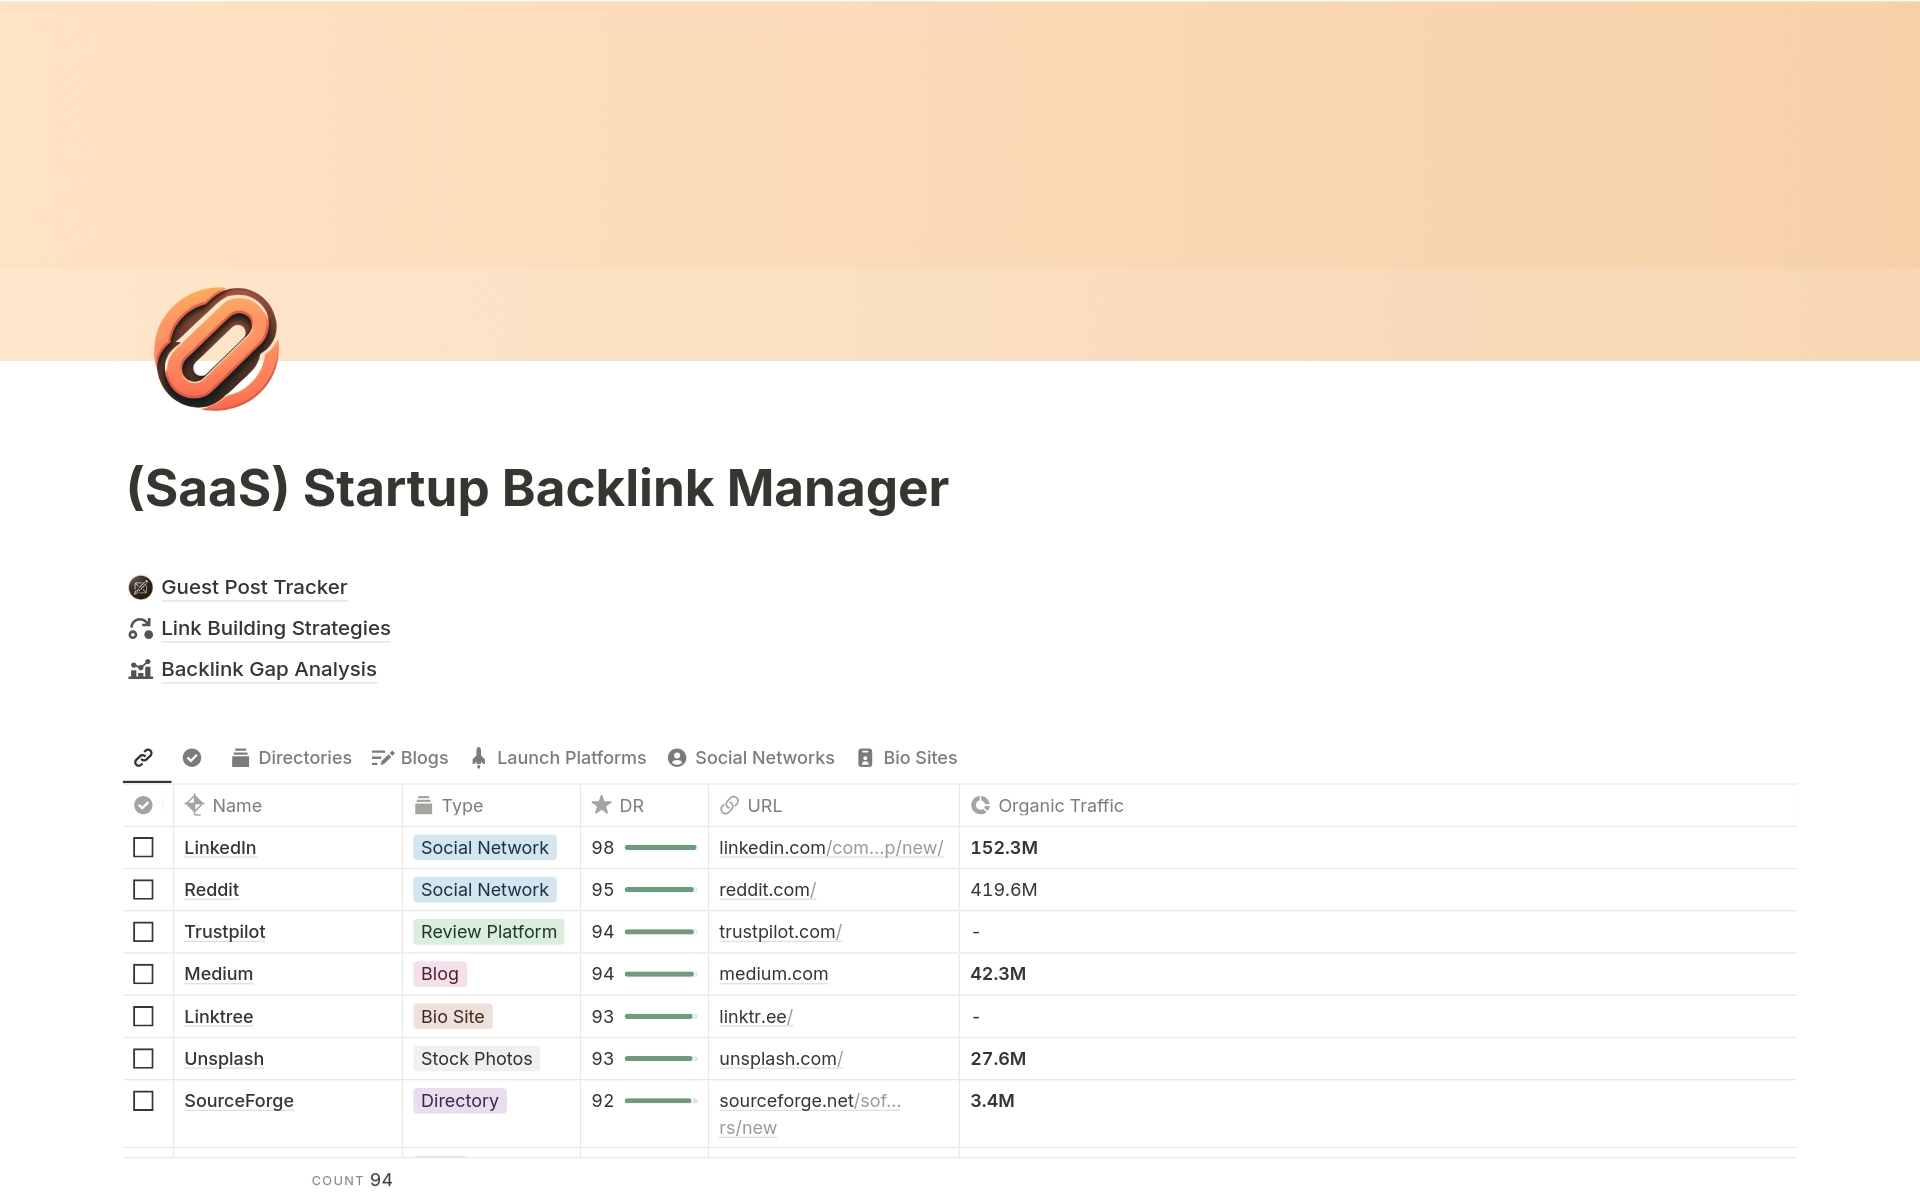 Vista previa de plantilla para SEO Backlinks Manager (90+ Incl: SaaS & Startups)